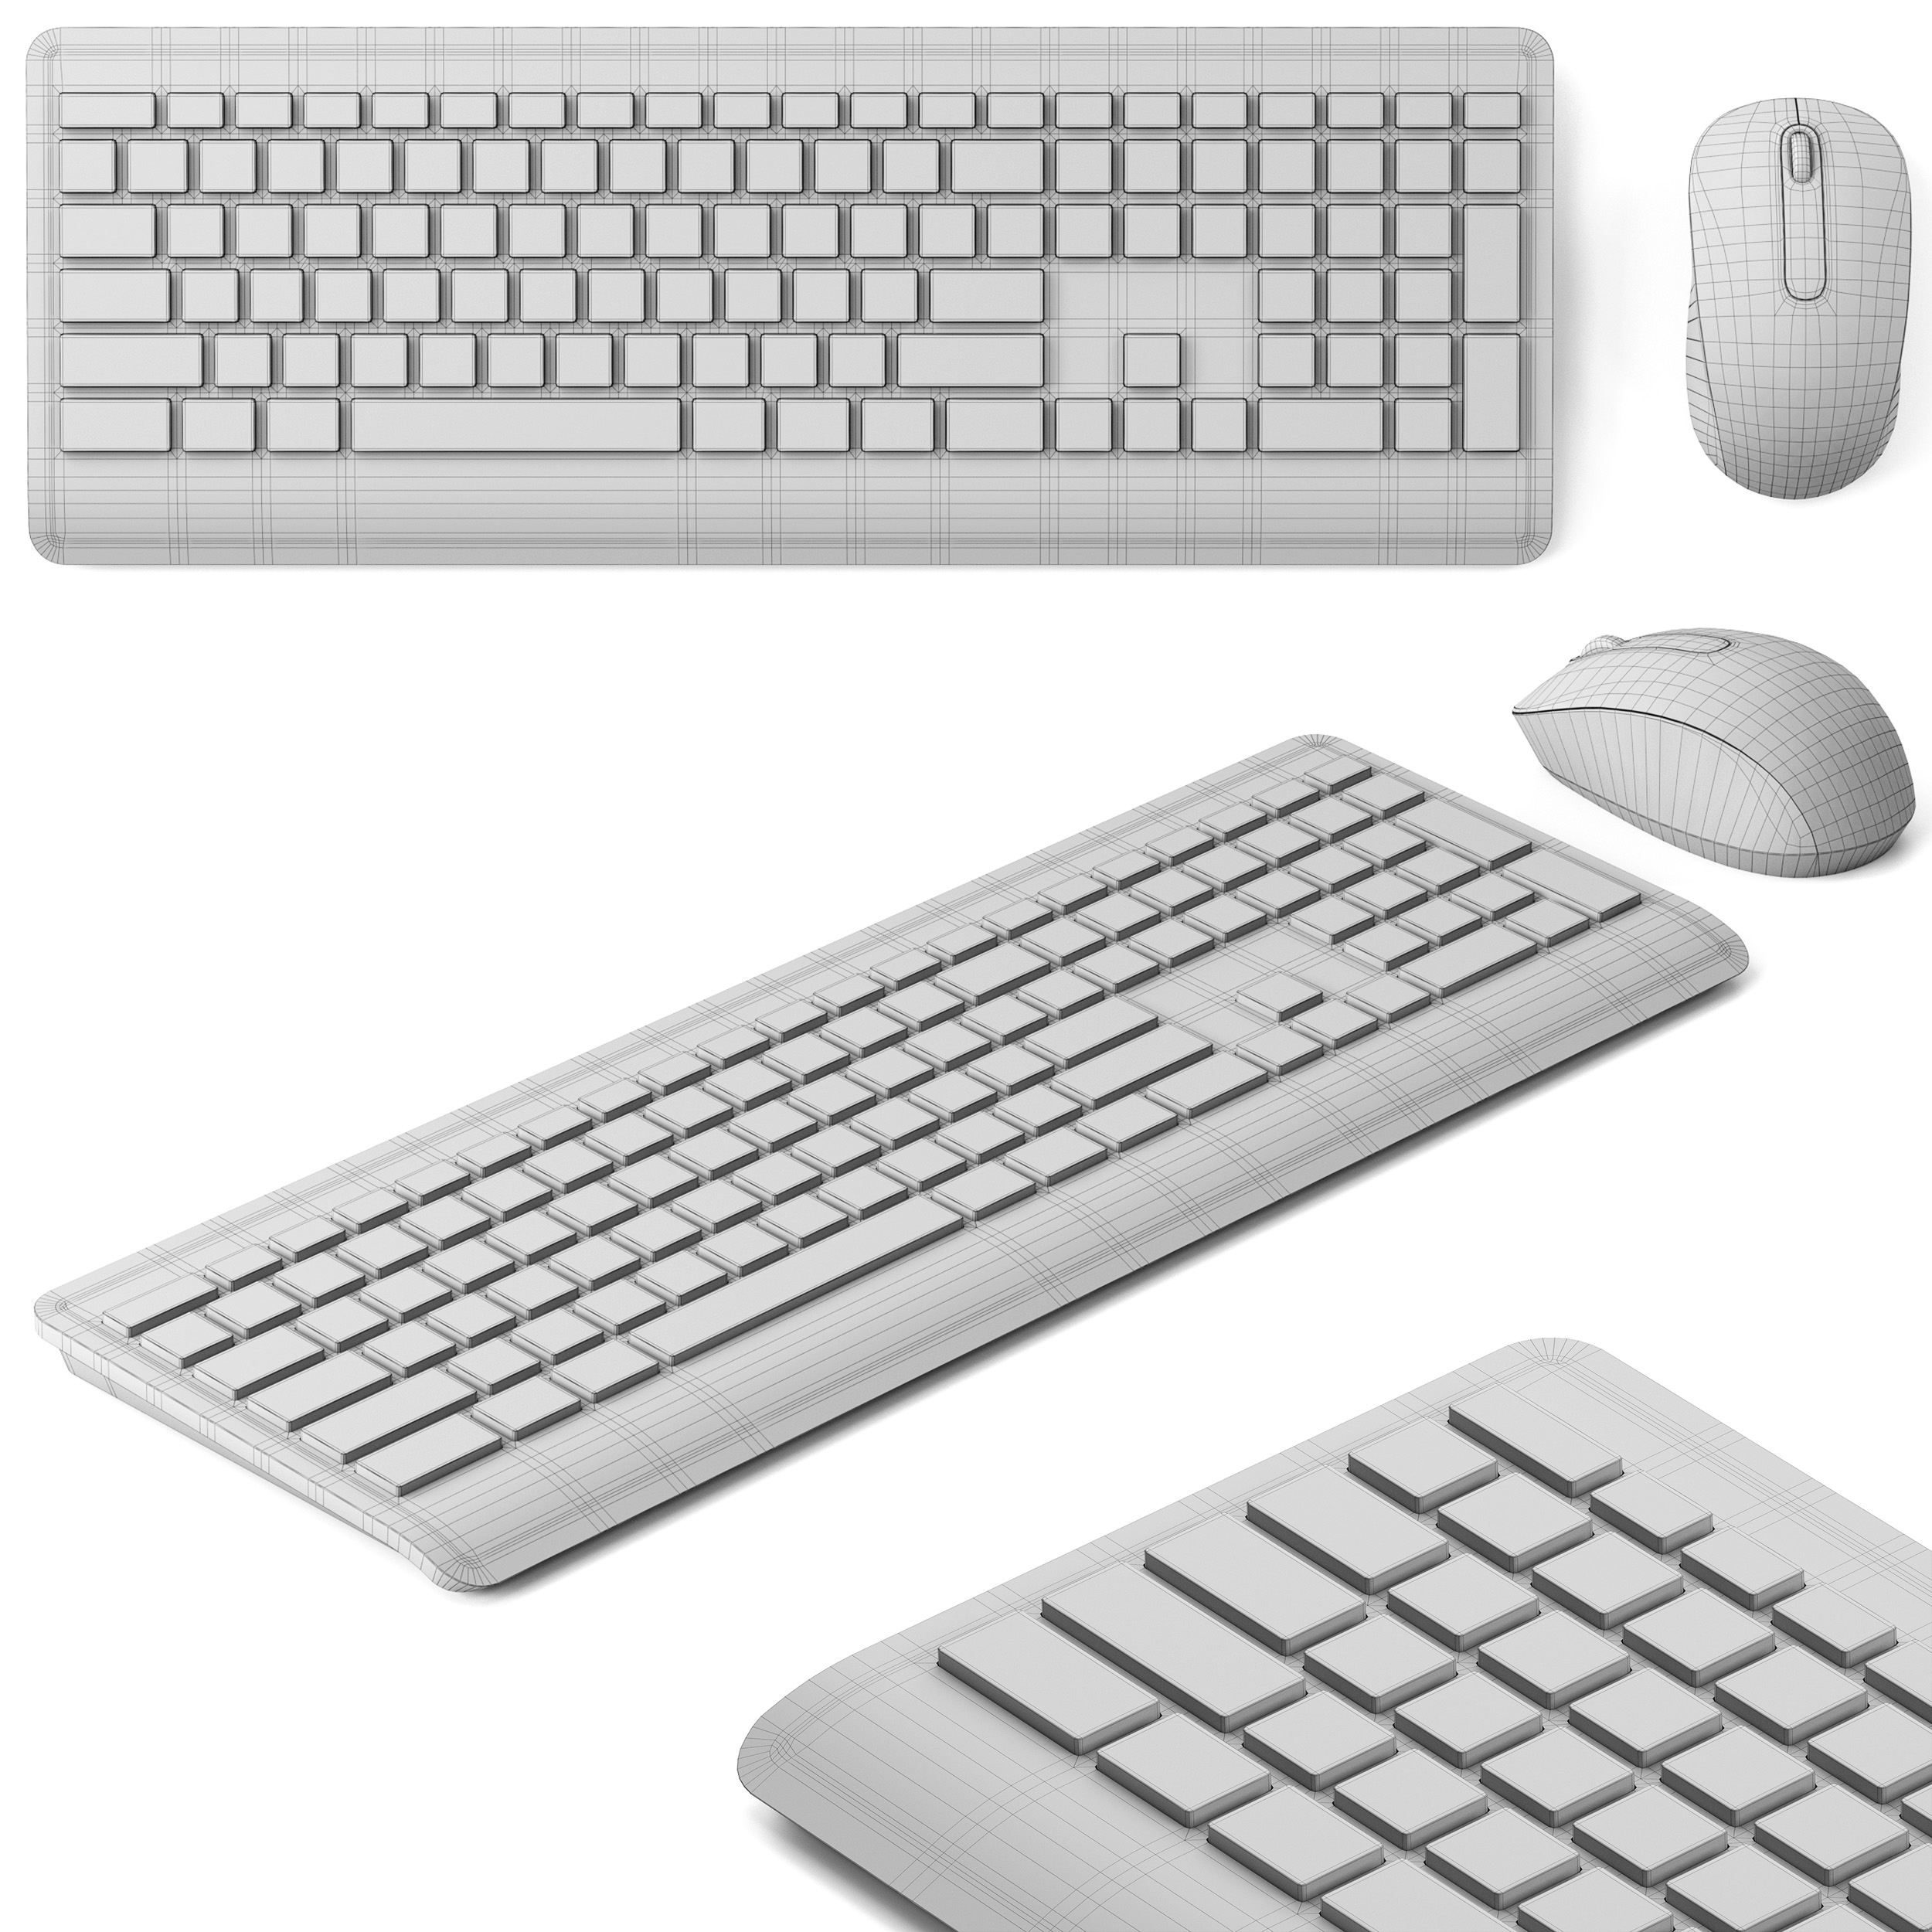 Microsoft Keyboard Mouse 3d Model Turbosquid 1689619